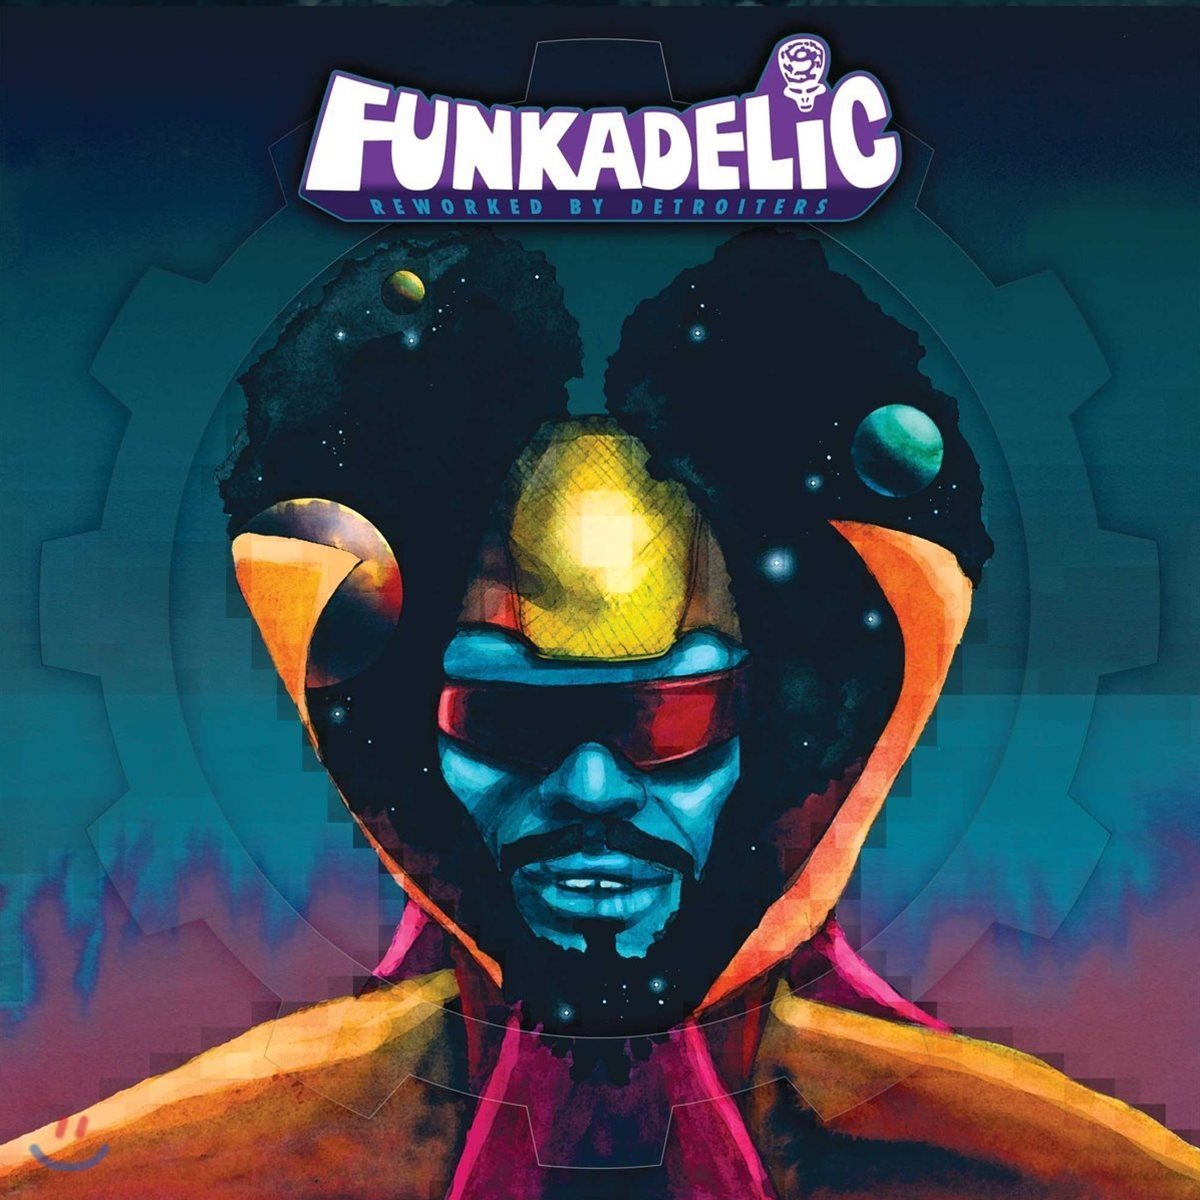 Funkadelic (펑카델릭) - Reworked By Detroiters [3LP]